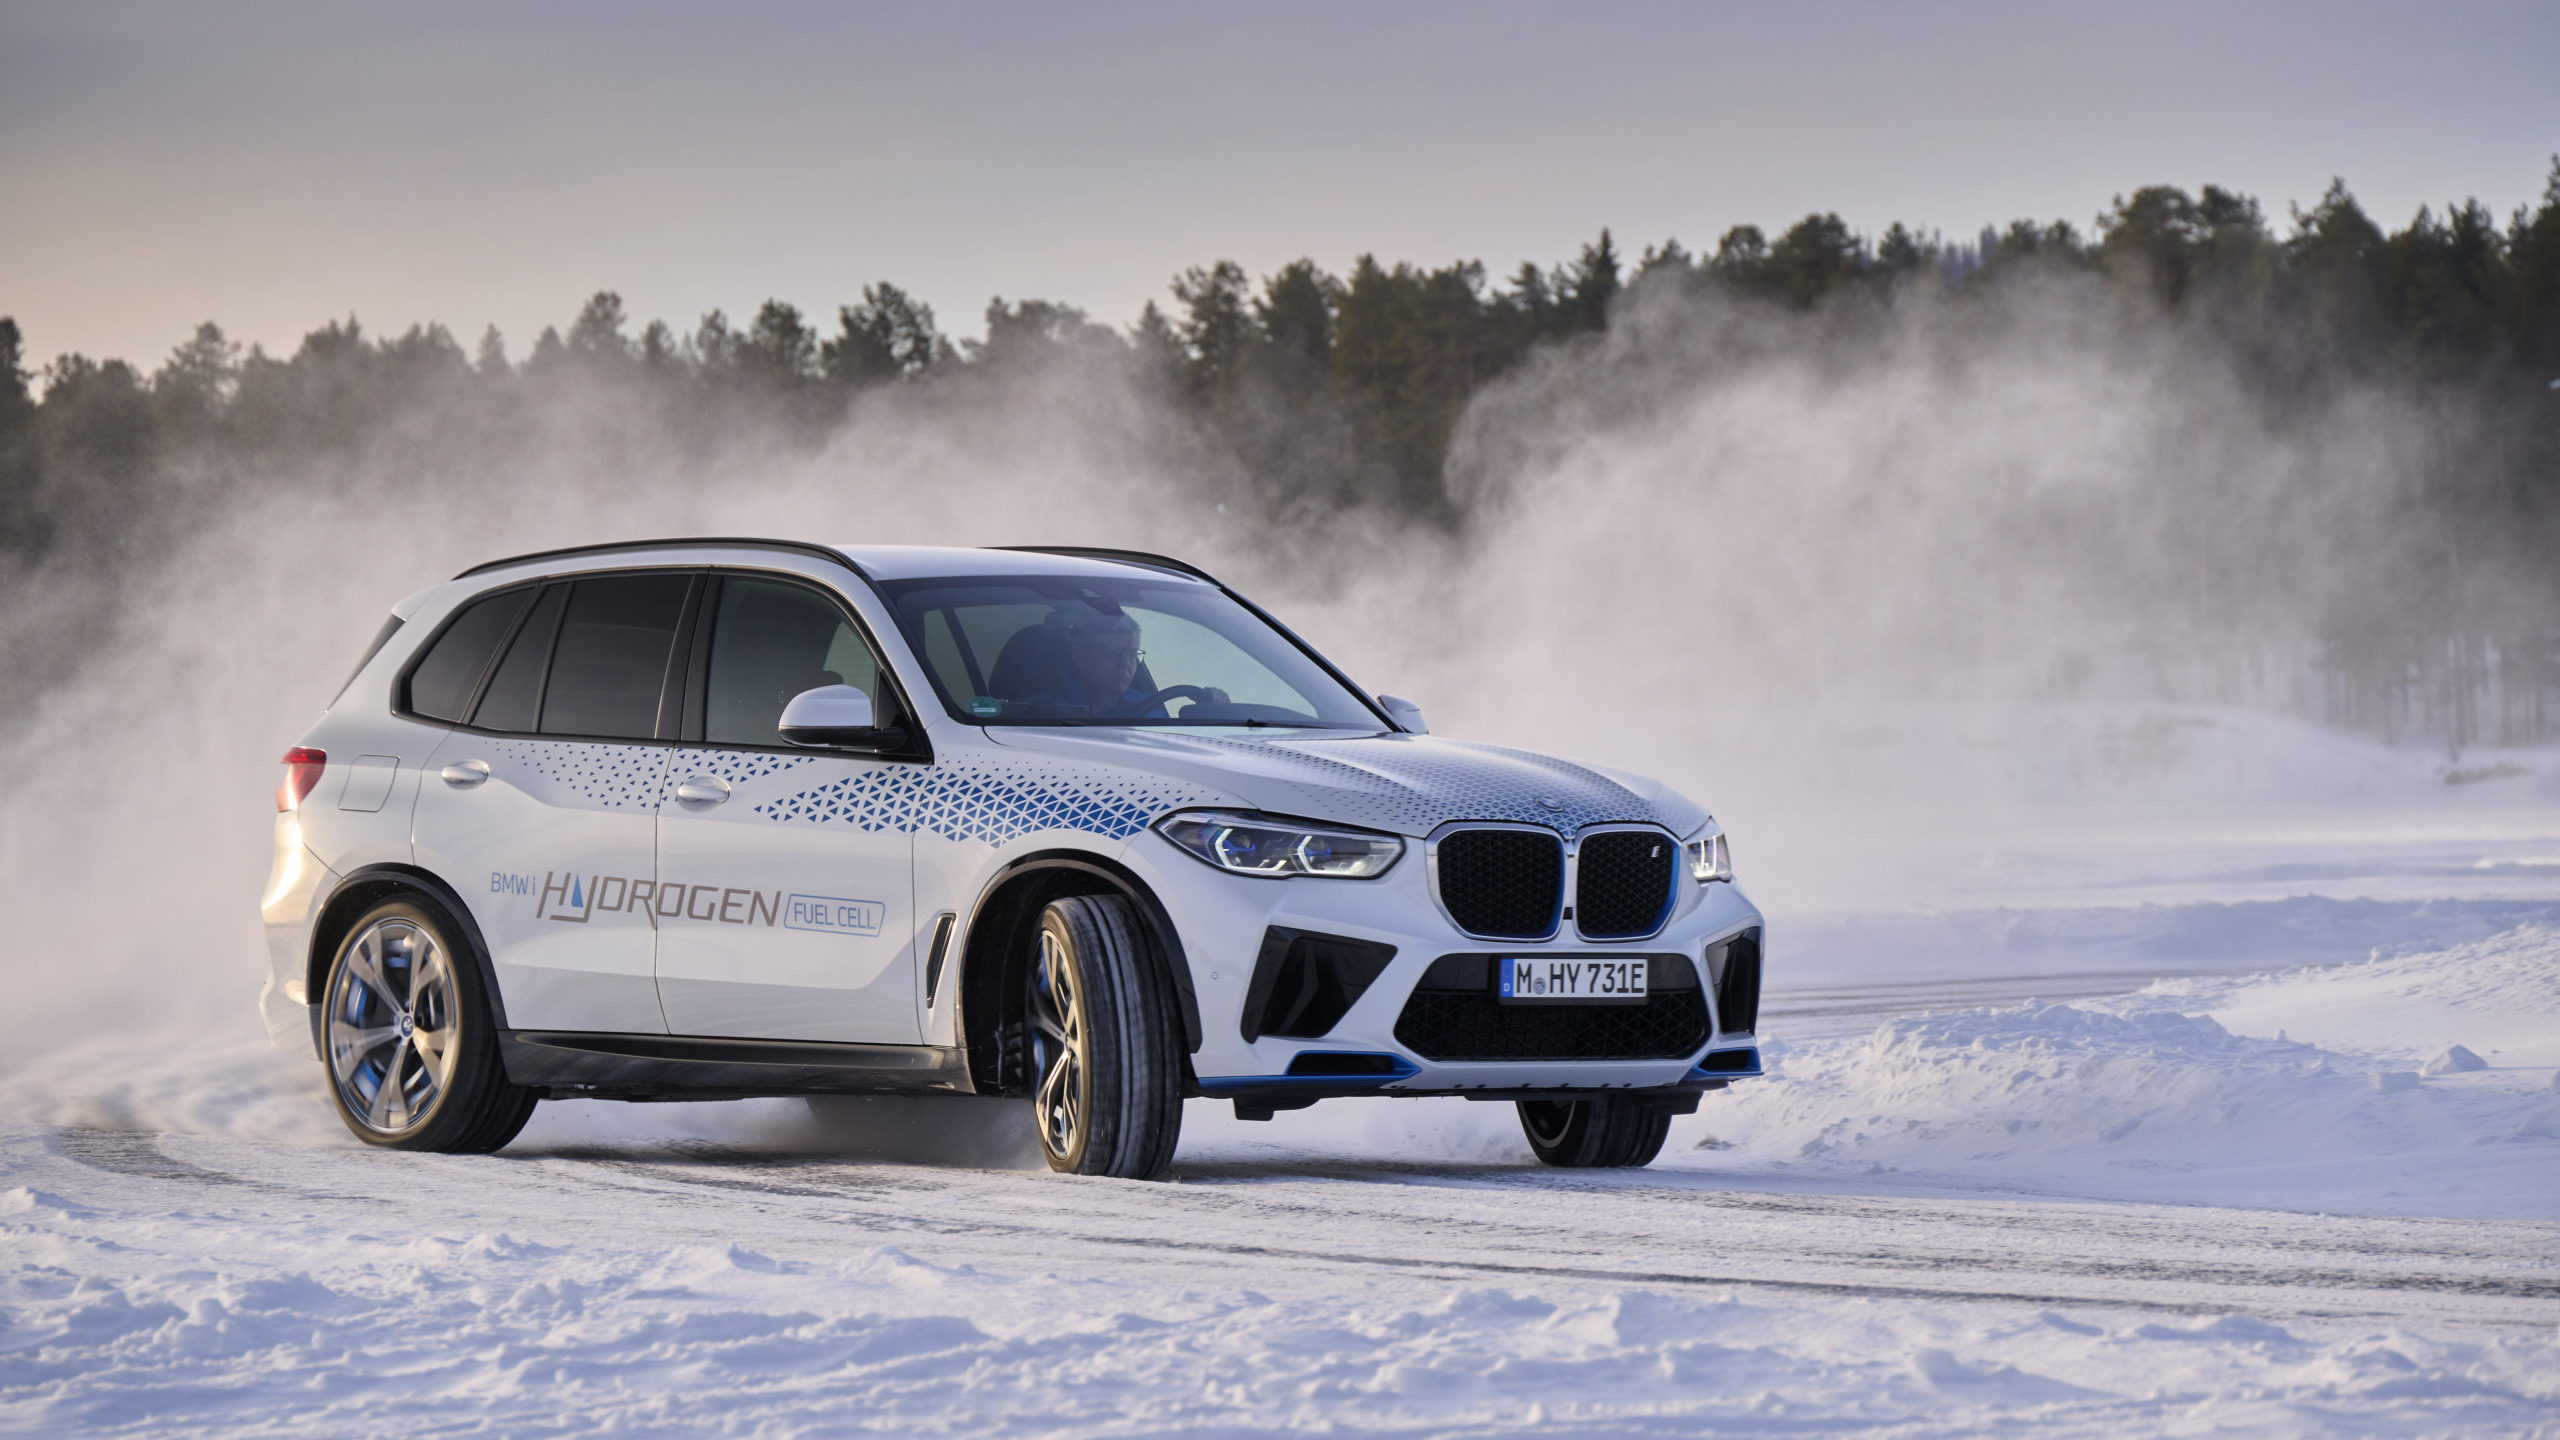 BMW va vendre des véhicules à hydrogène d’ici 2025